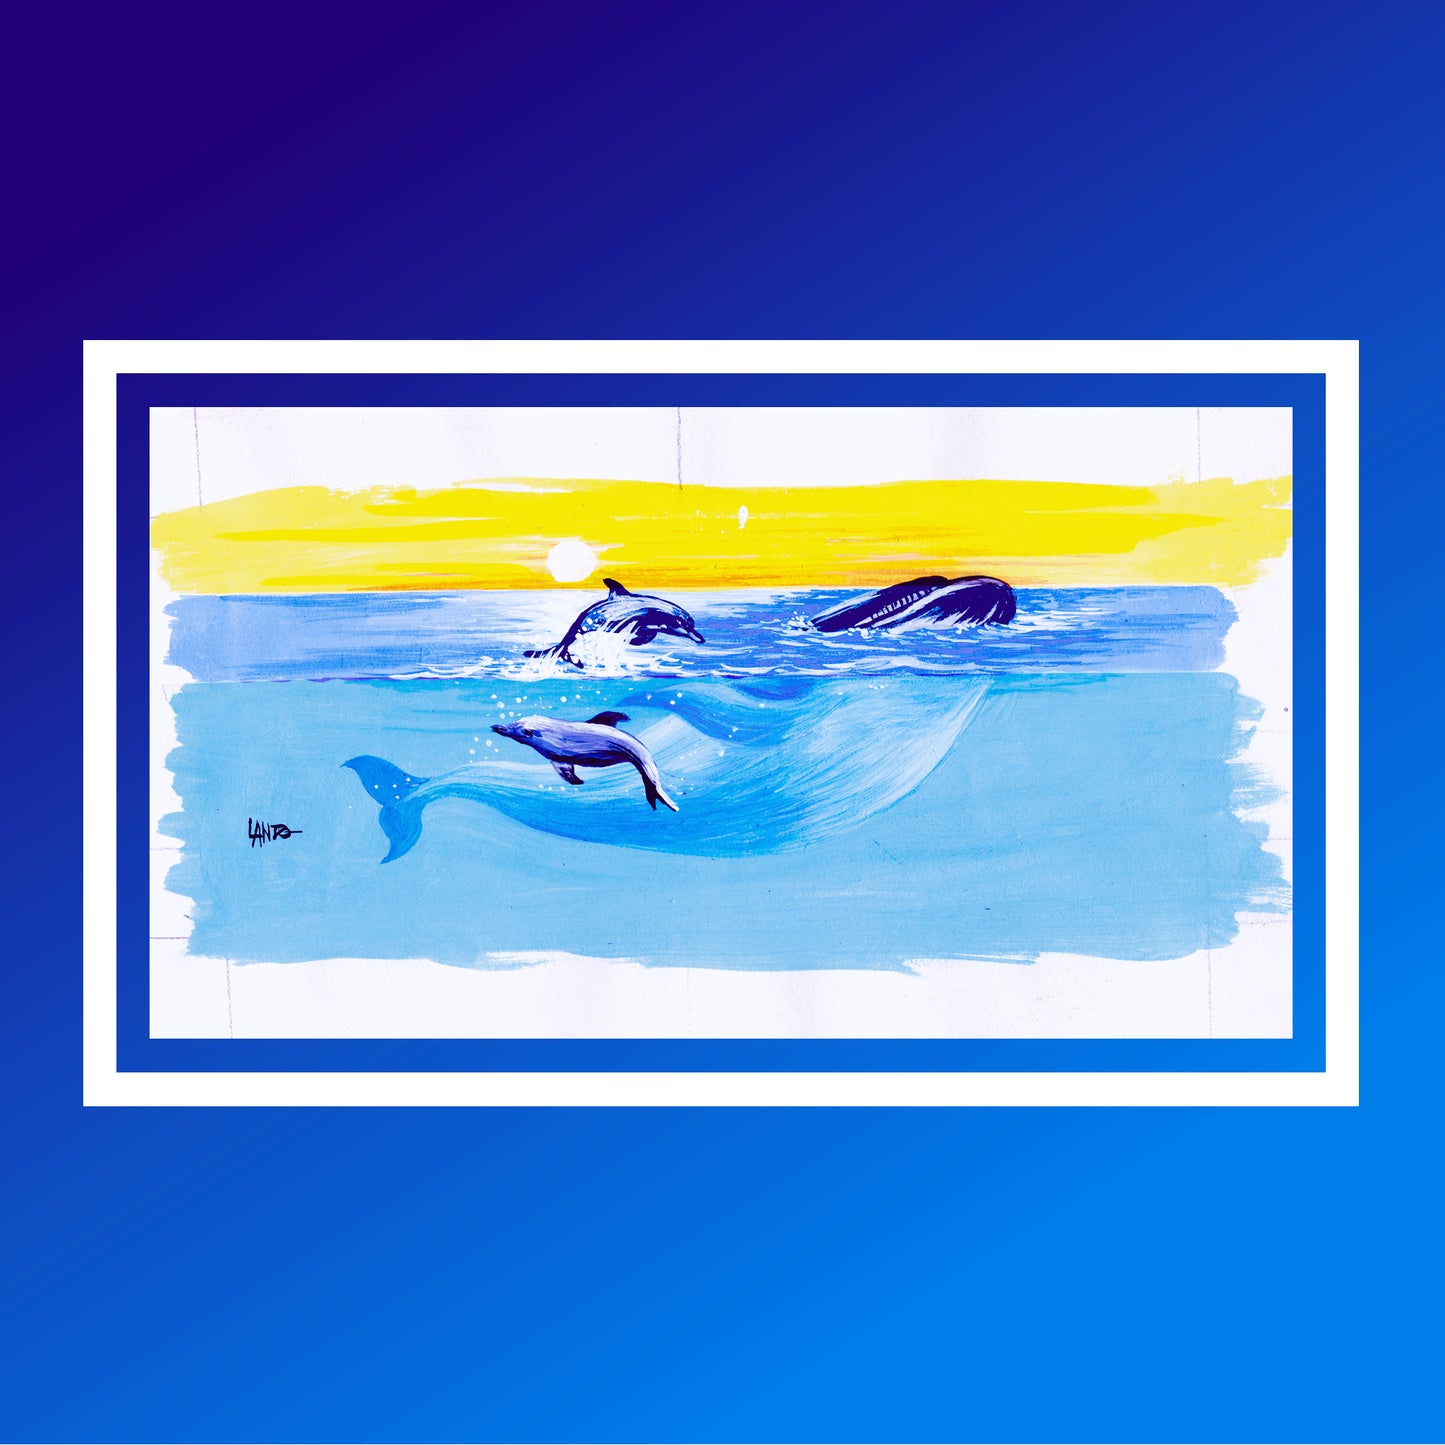 AquaClic® Baleine + dauphins